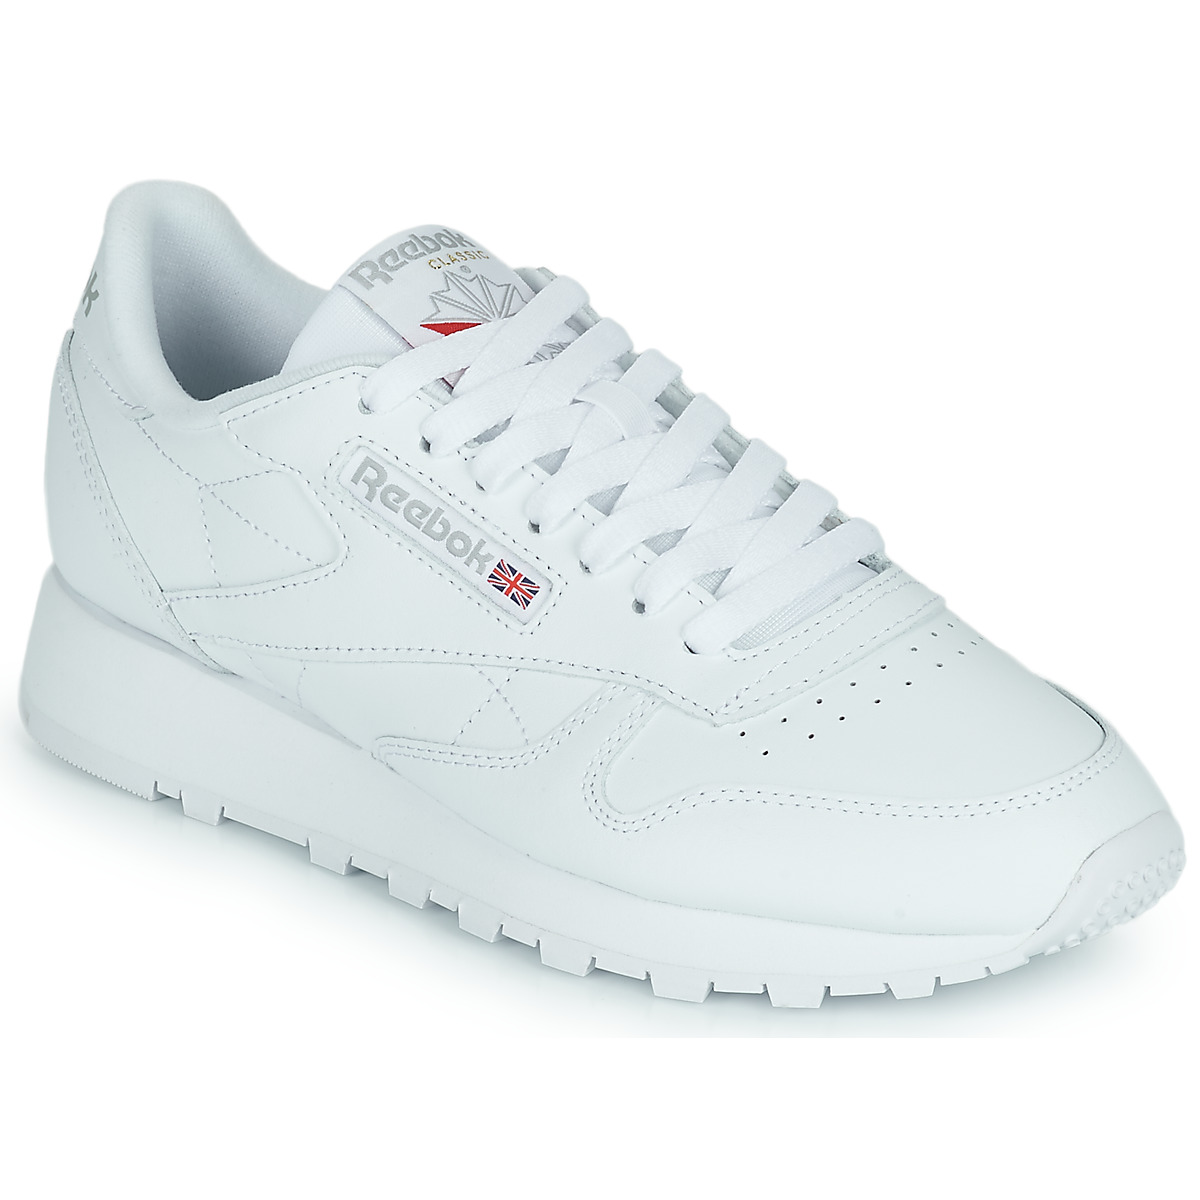 Chaussures zapatillas de running logo Reebok hombre talla 21.5 grises CLASSIC LEATHER Blanc